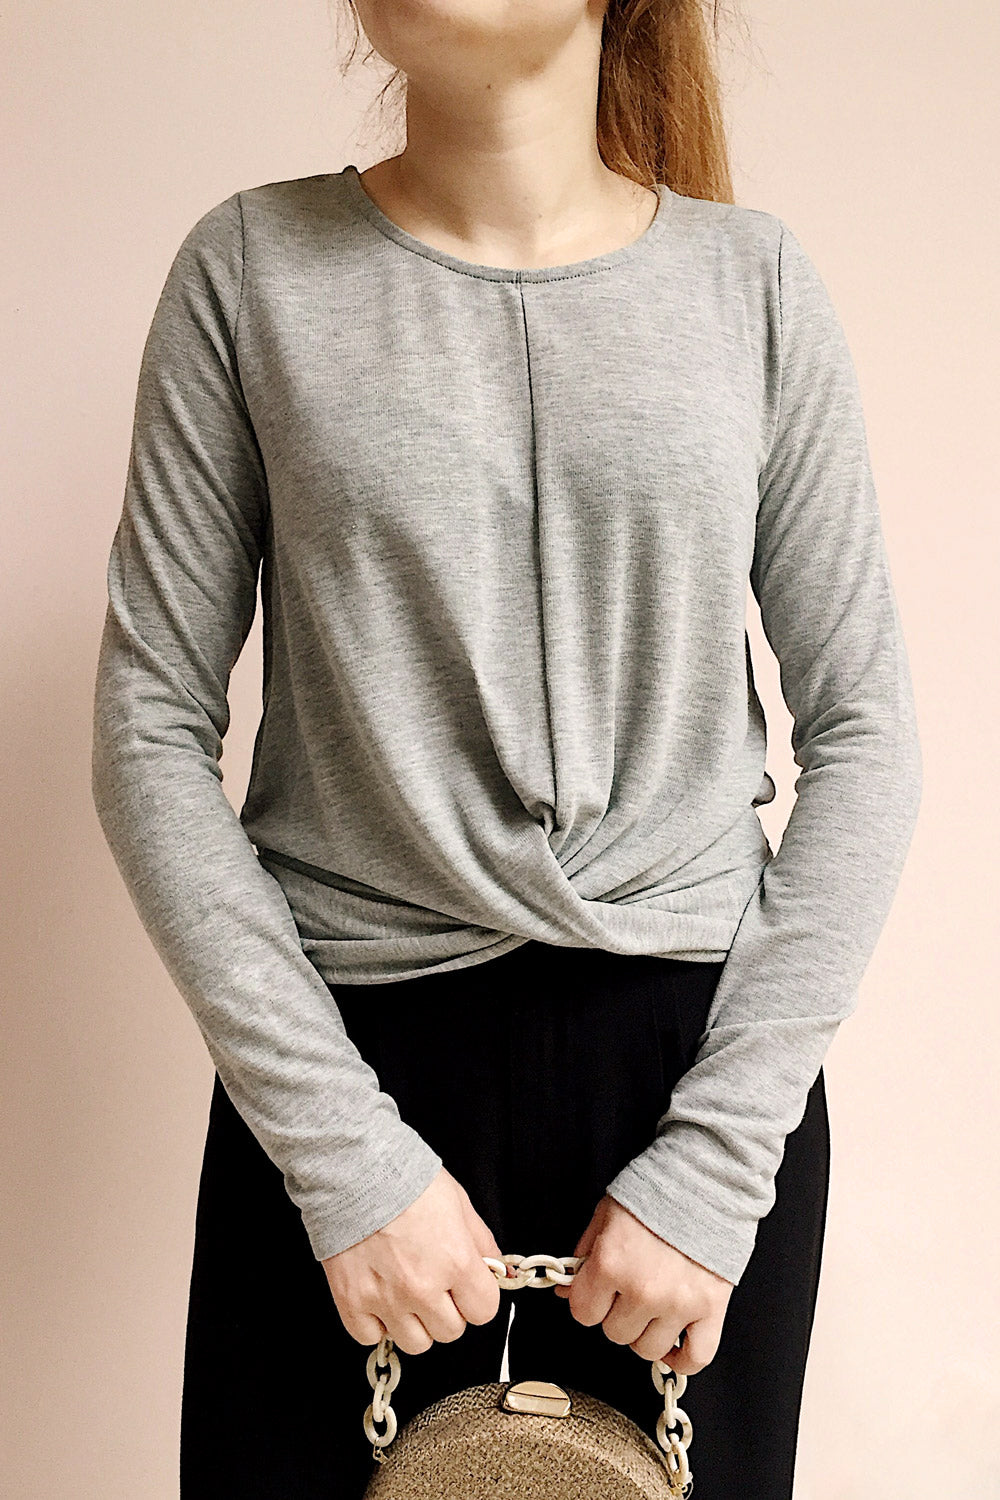 Teplice Grey Sweater | Chandail Gris photo | La petite garçonne